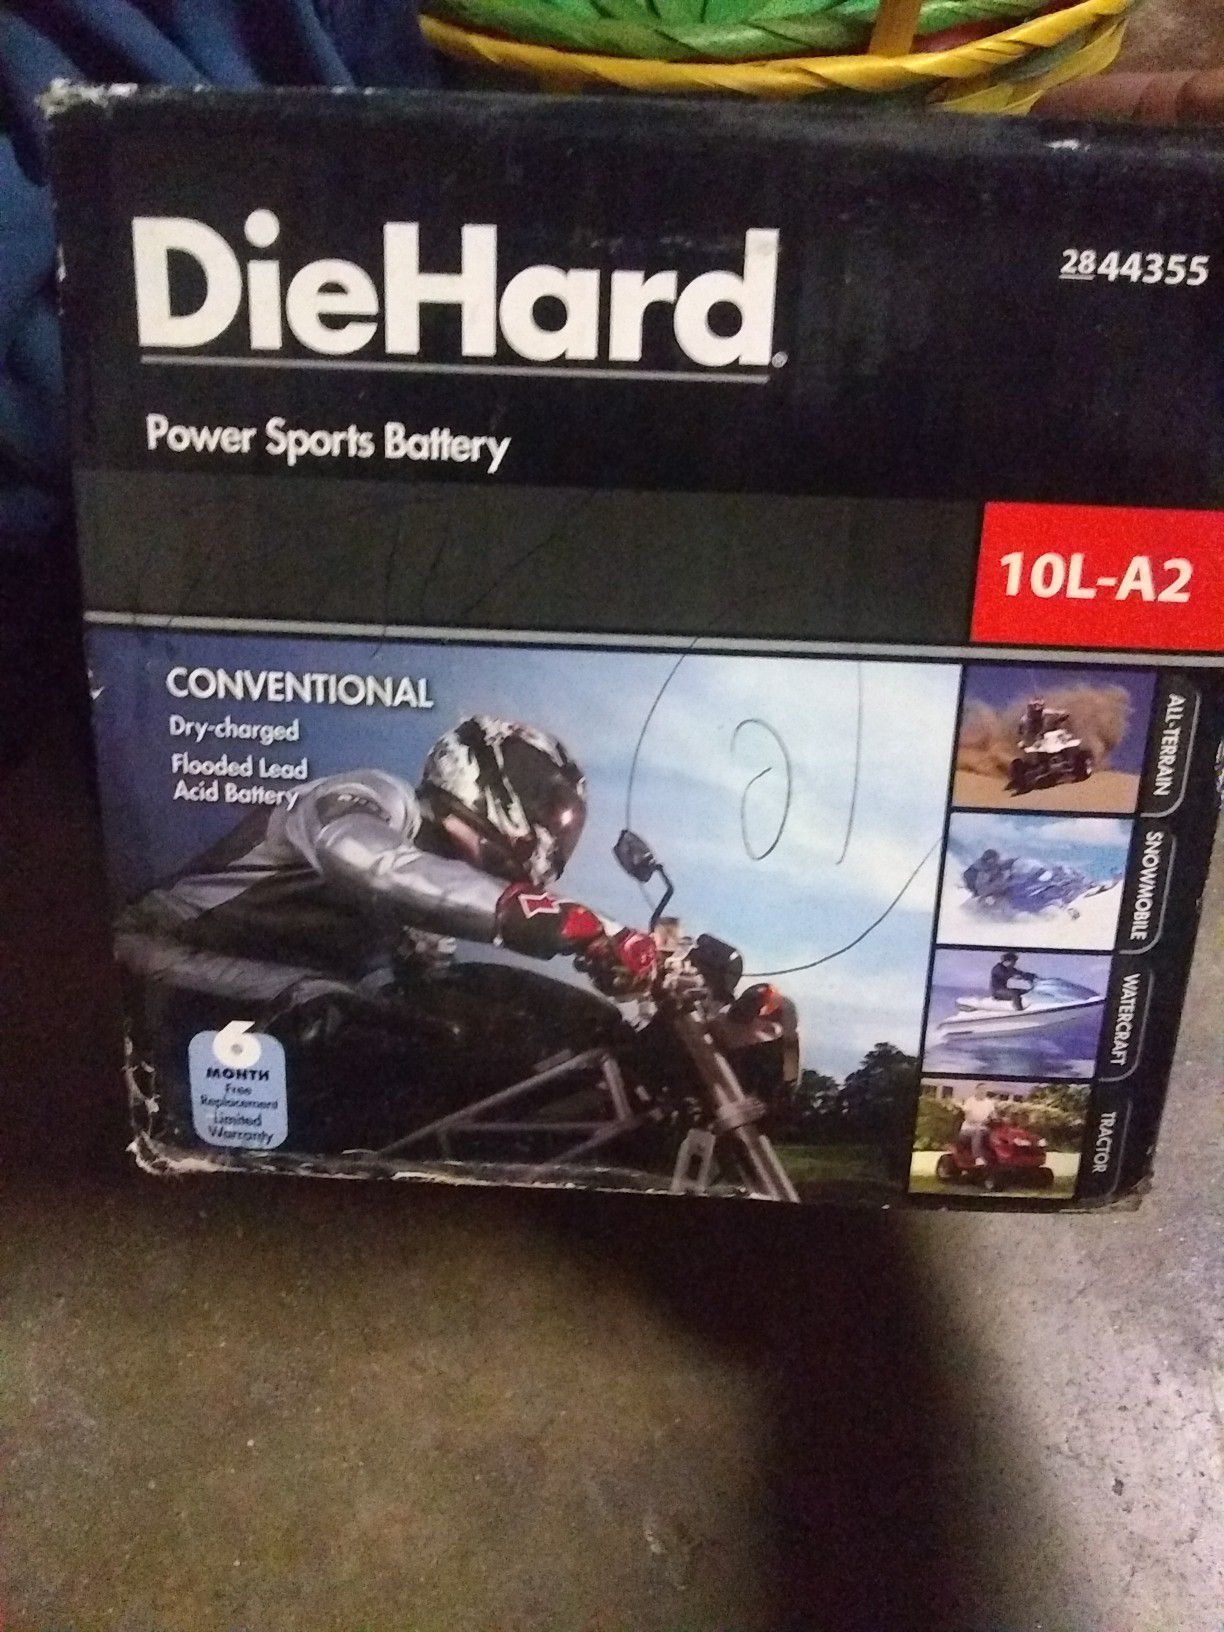 Die hard Power sport battery brand new 10L-A2 for atv dirt bike snowmobile lawn mower